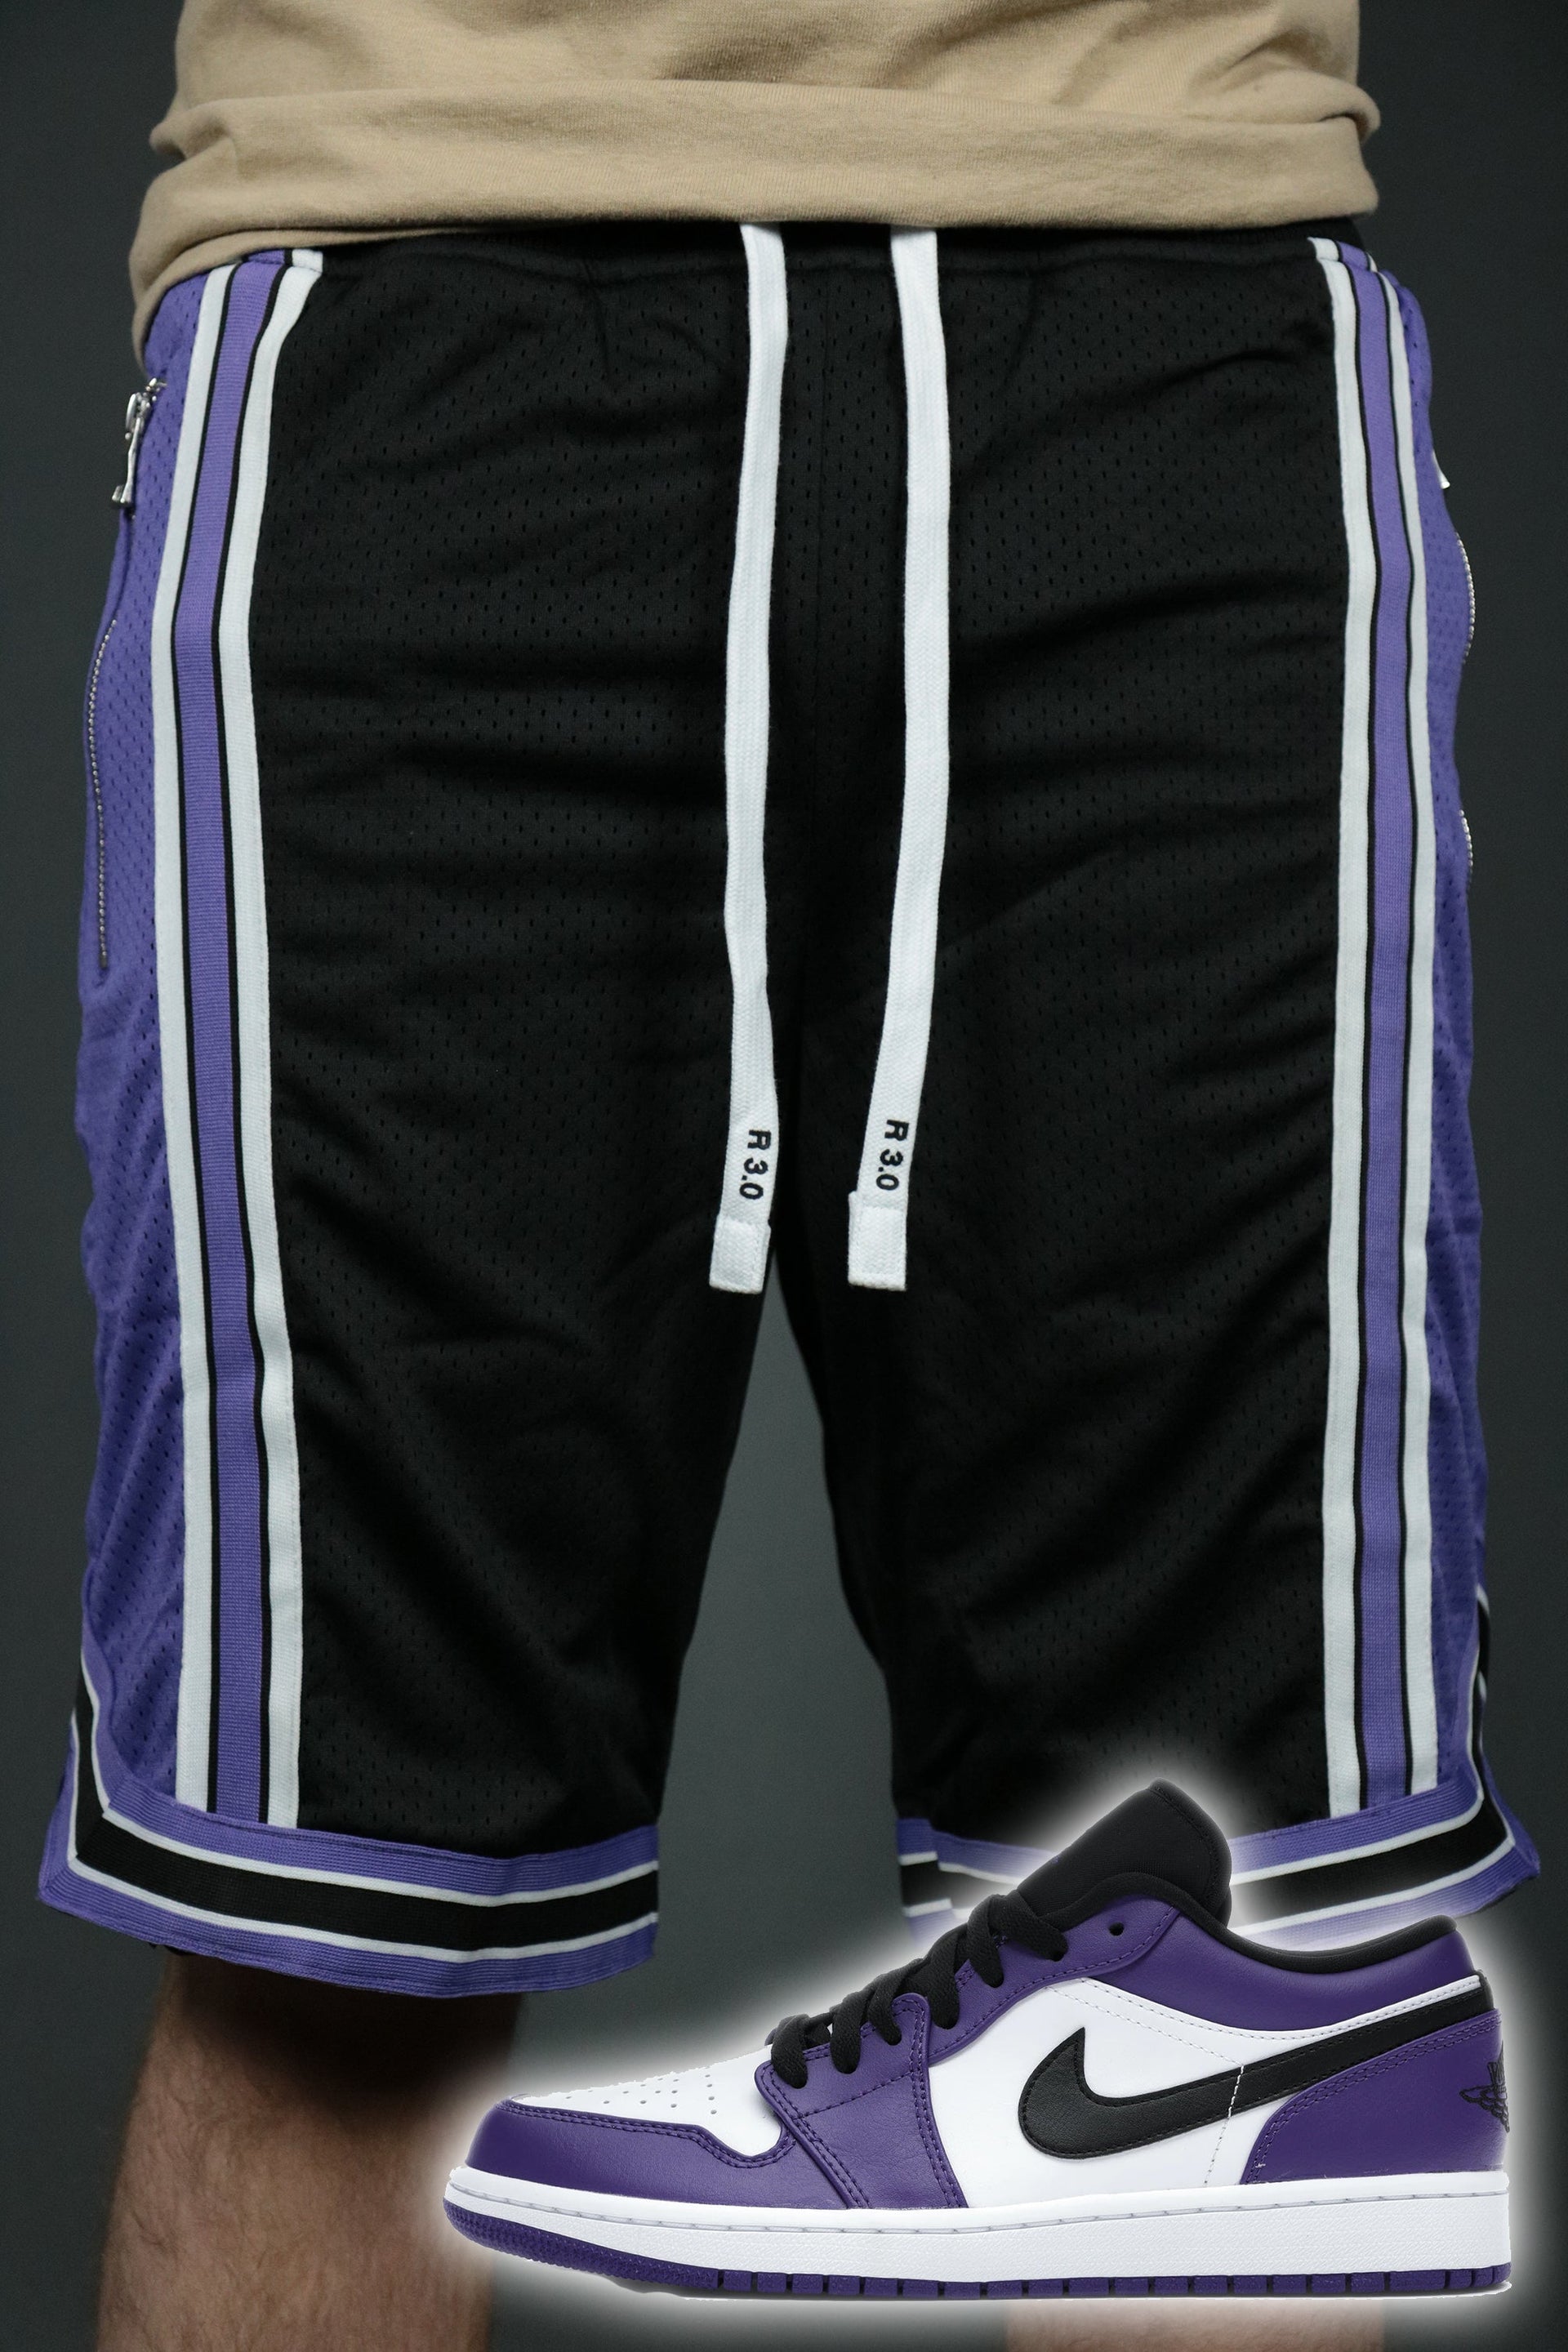 The Sacramento black purple shorts to match Jordan 1 Low Court Purple sneakers with white stripes.